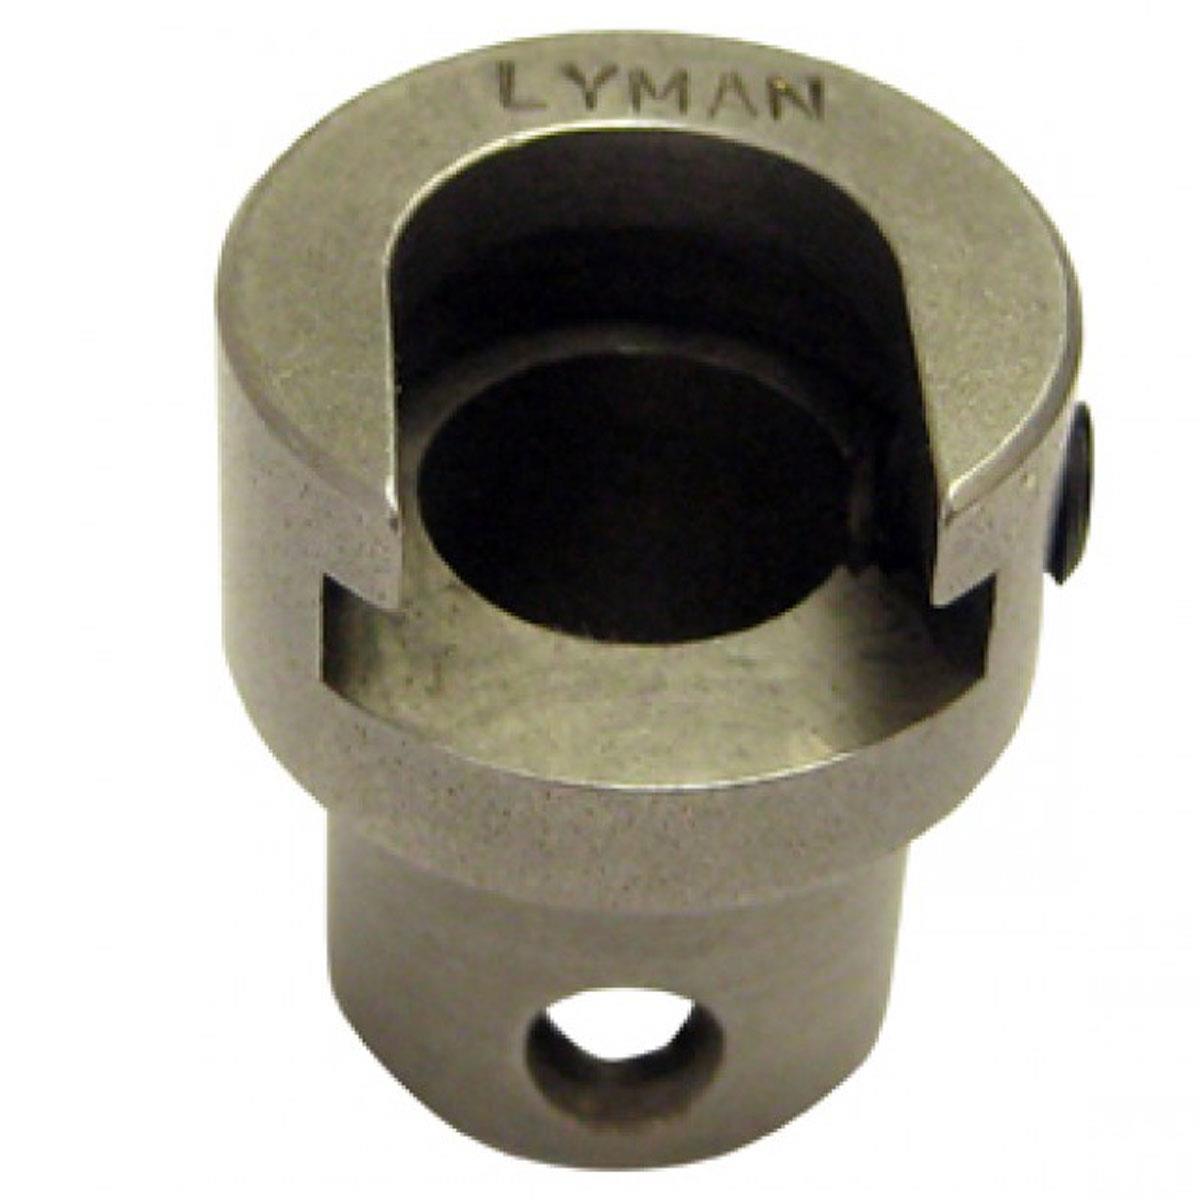 Image of Lyman Shellholder Adapter for J-Type Shellholder to X-Type Ram Conversion